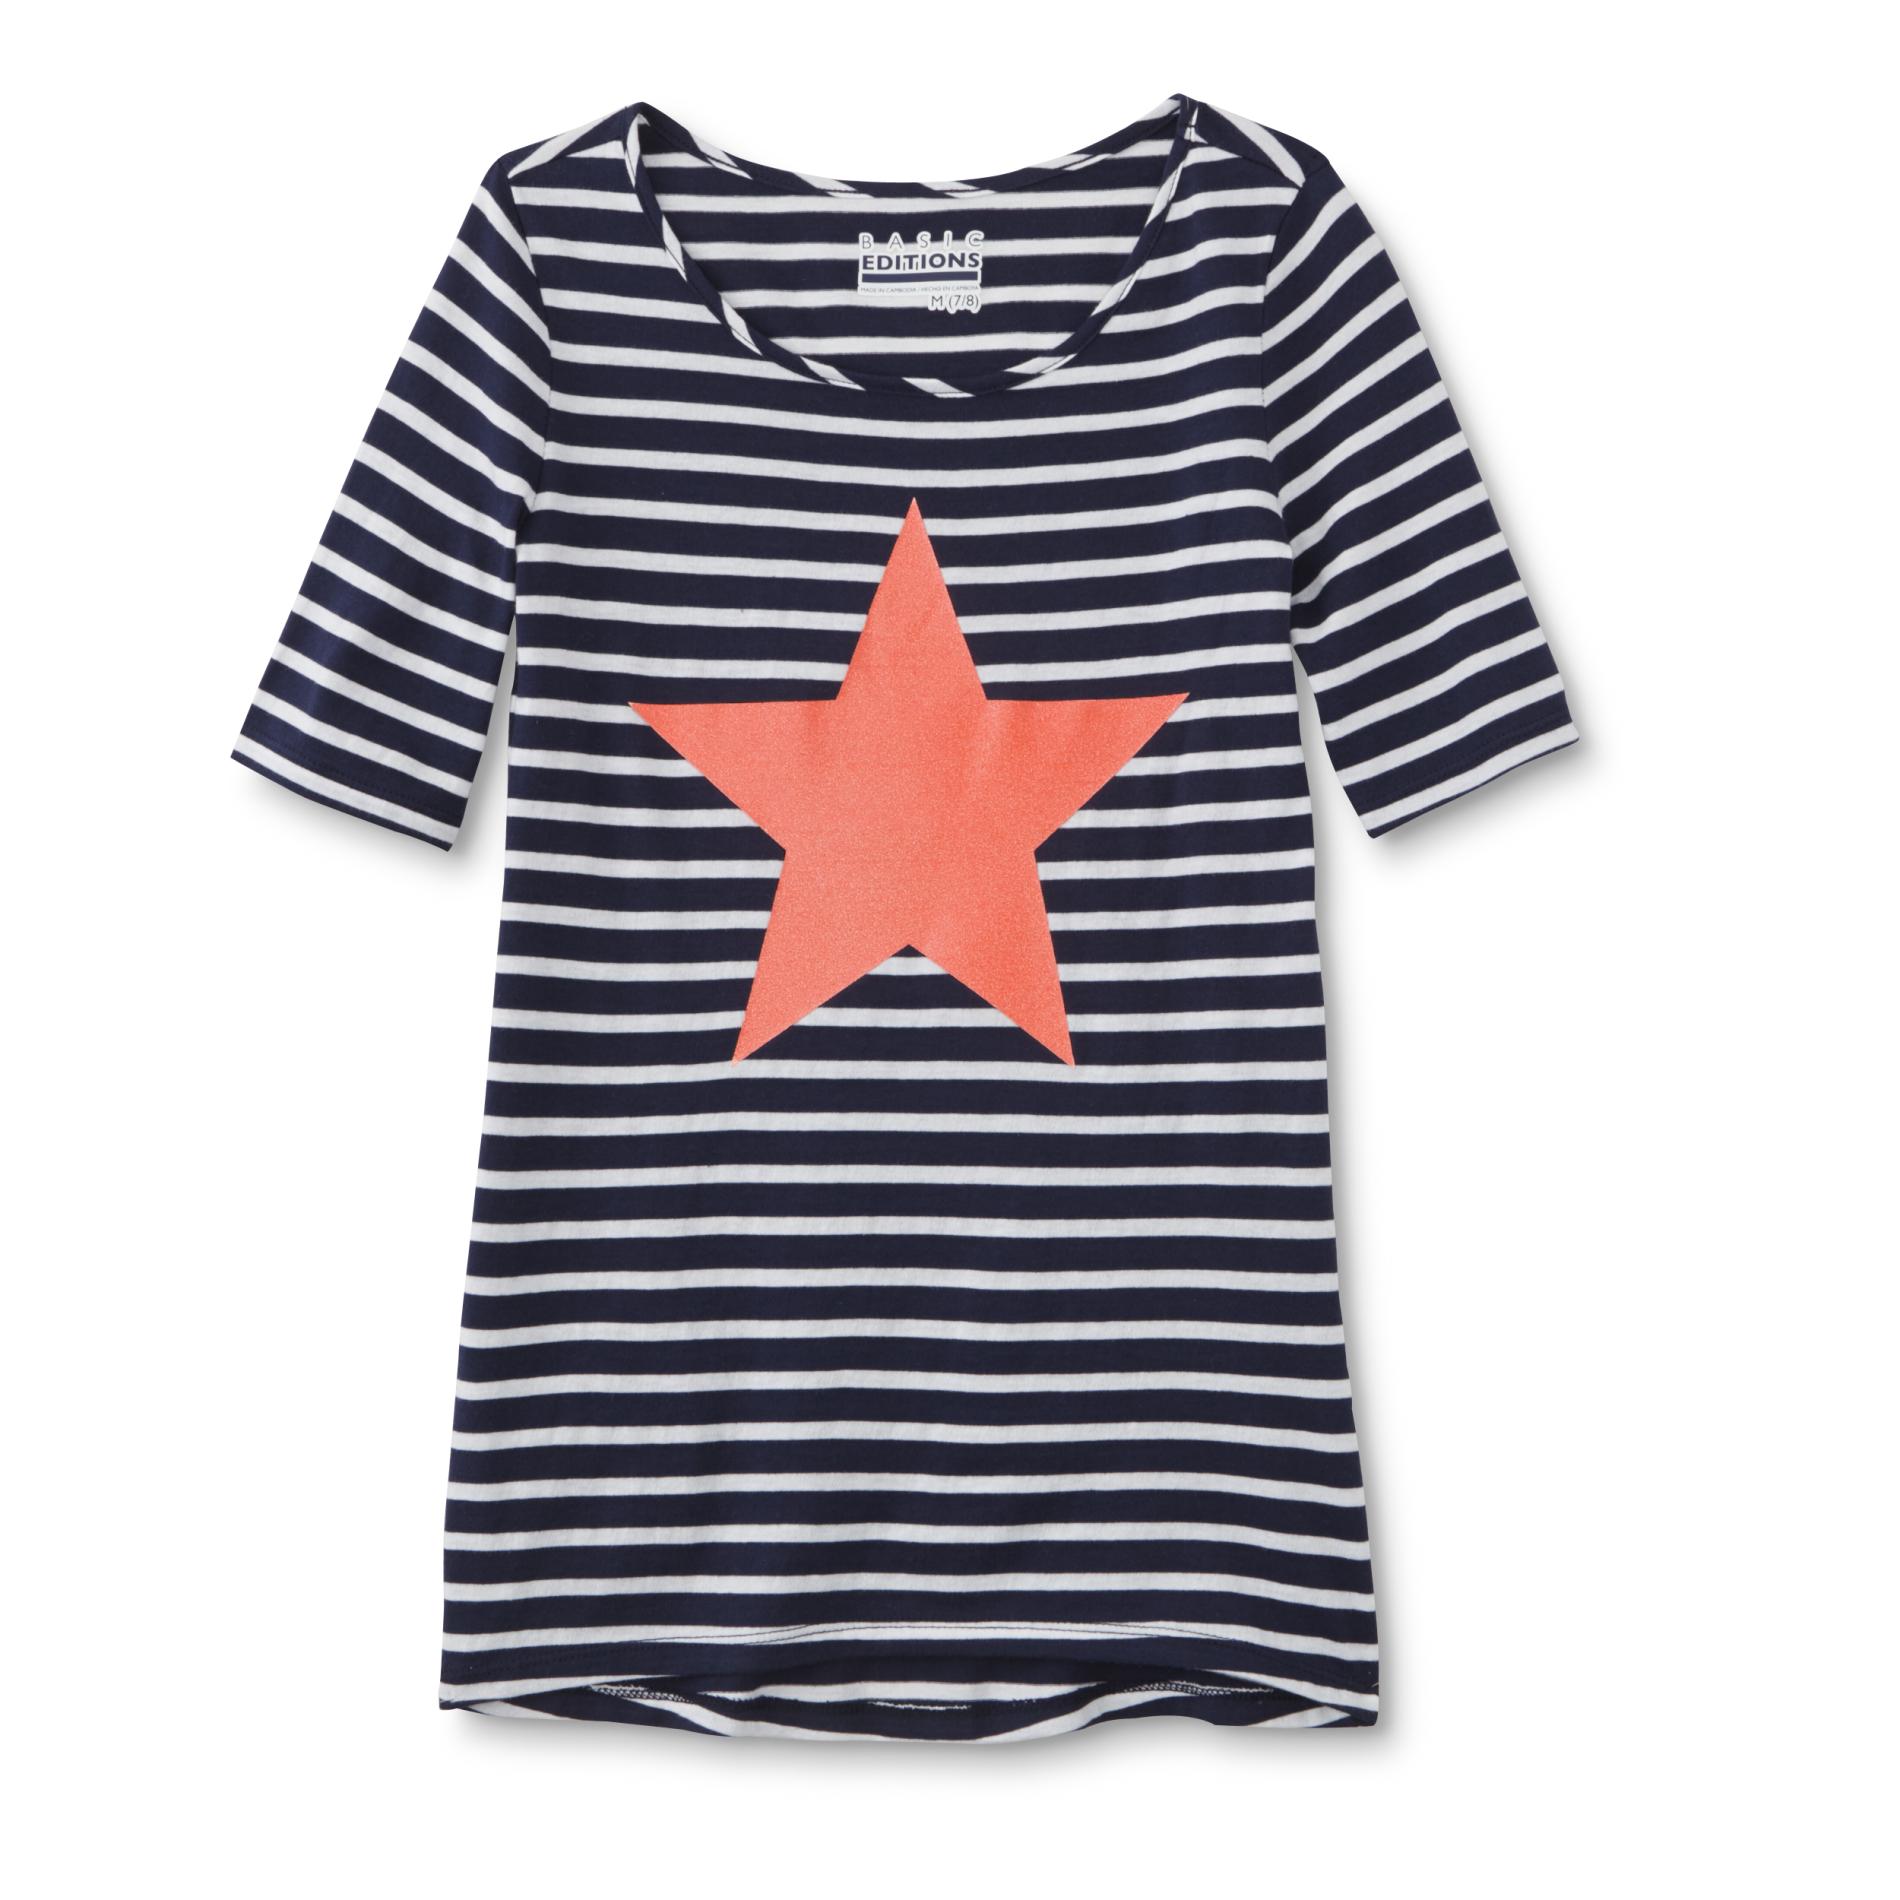 Basic Editions Girl's Glitter Graphic T-Shirt - Star